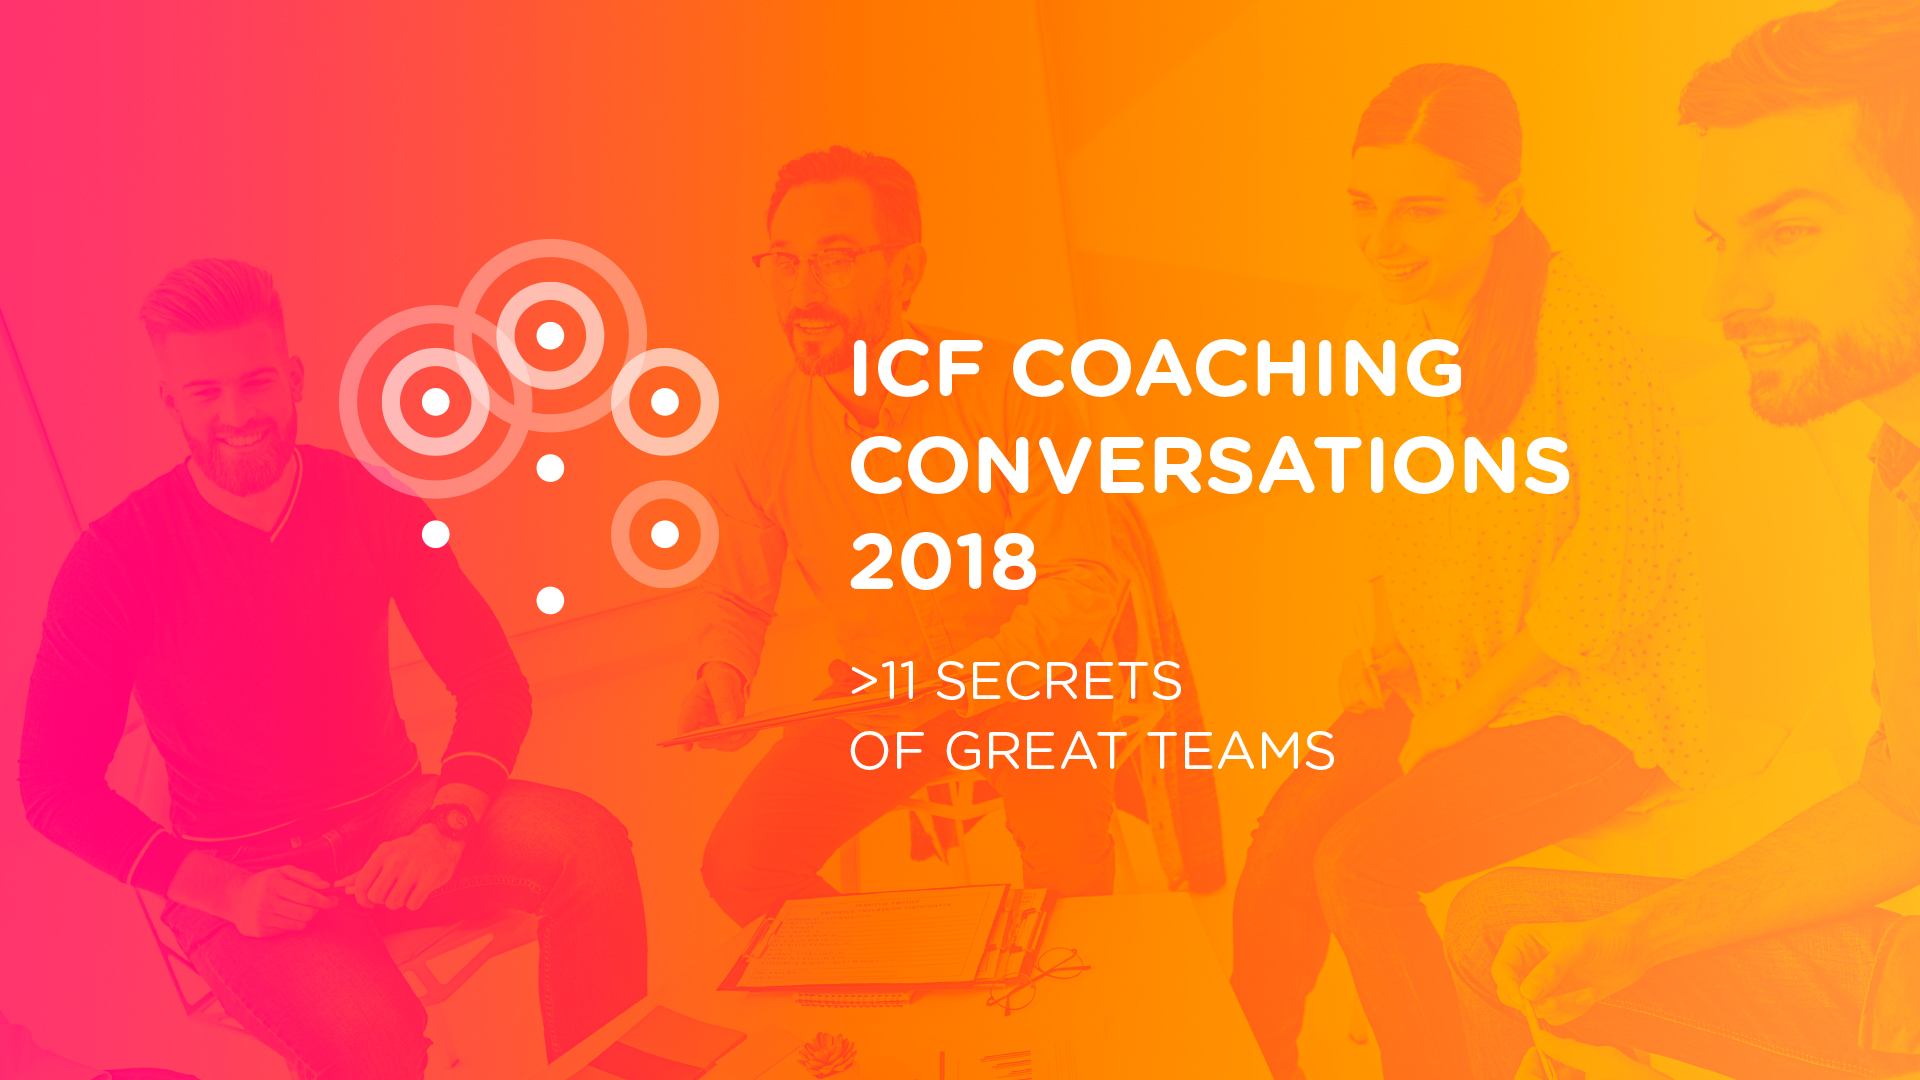 ICF konference Coaching Conversations